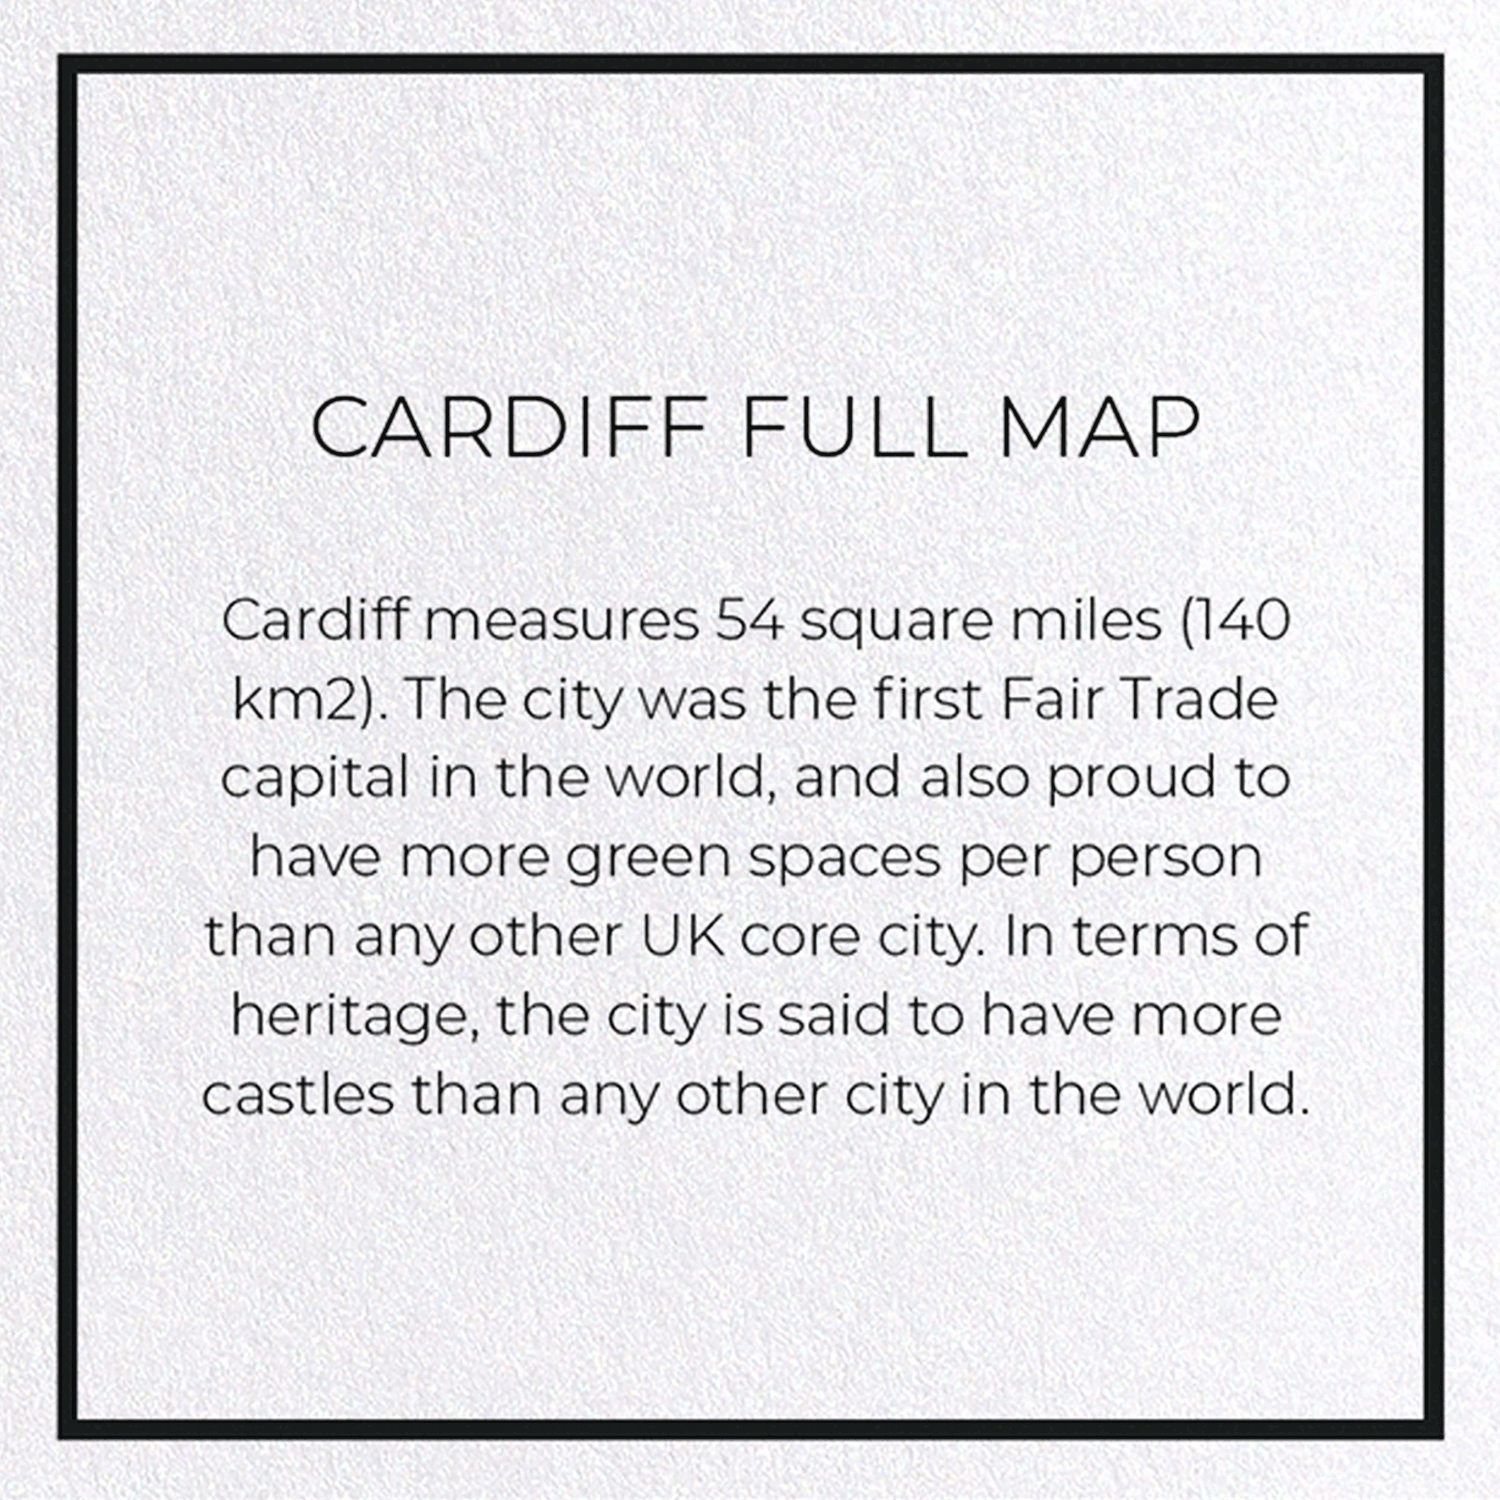 CARDIFF FULL MAP